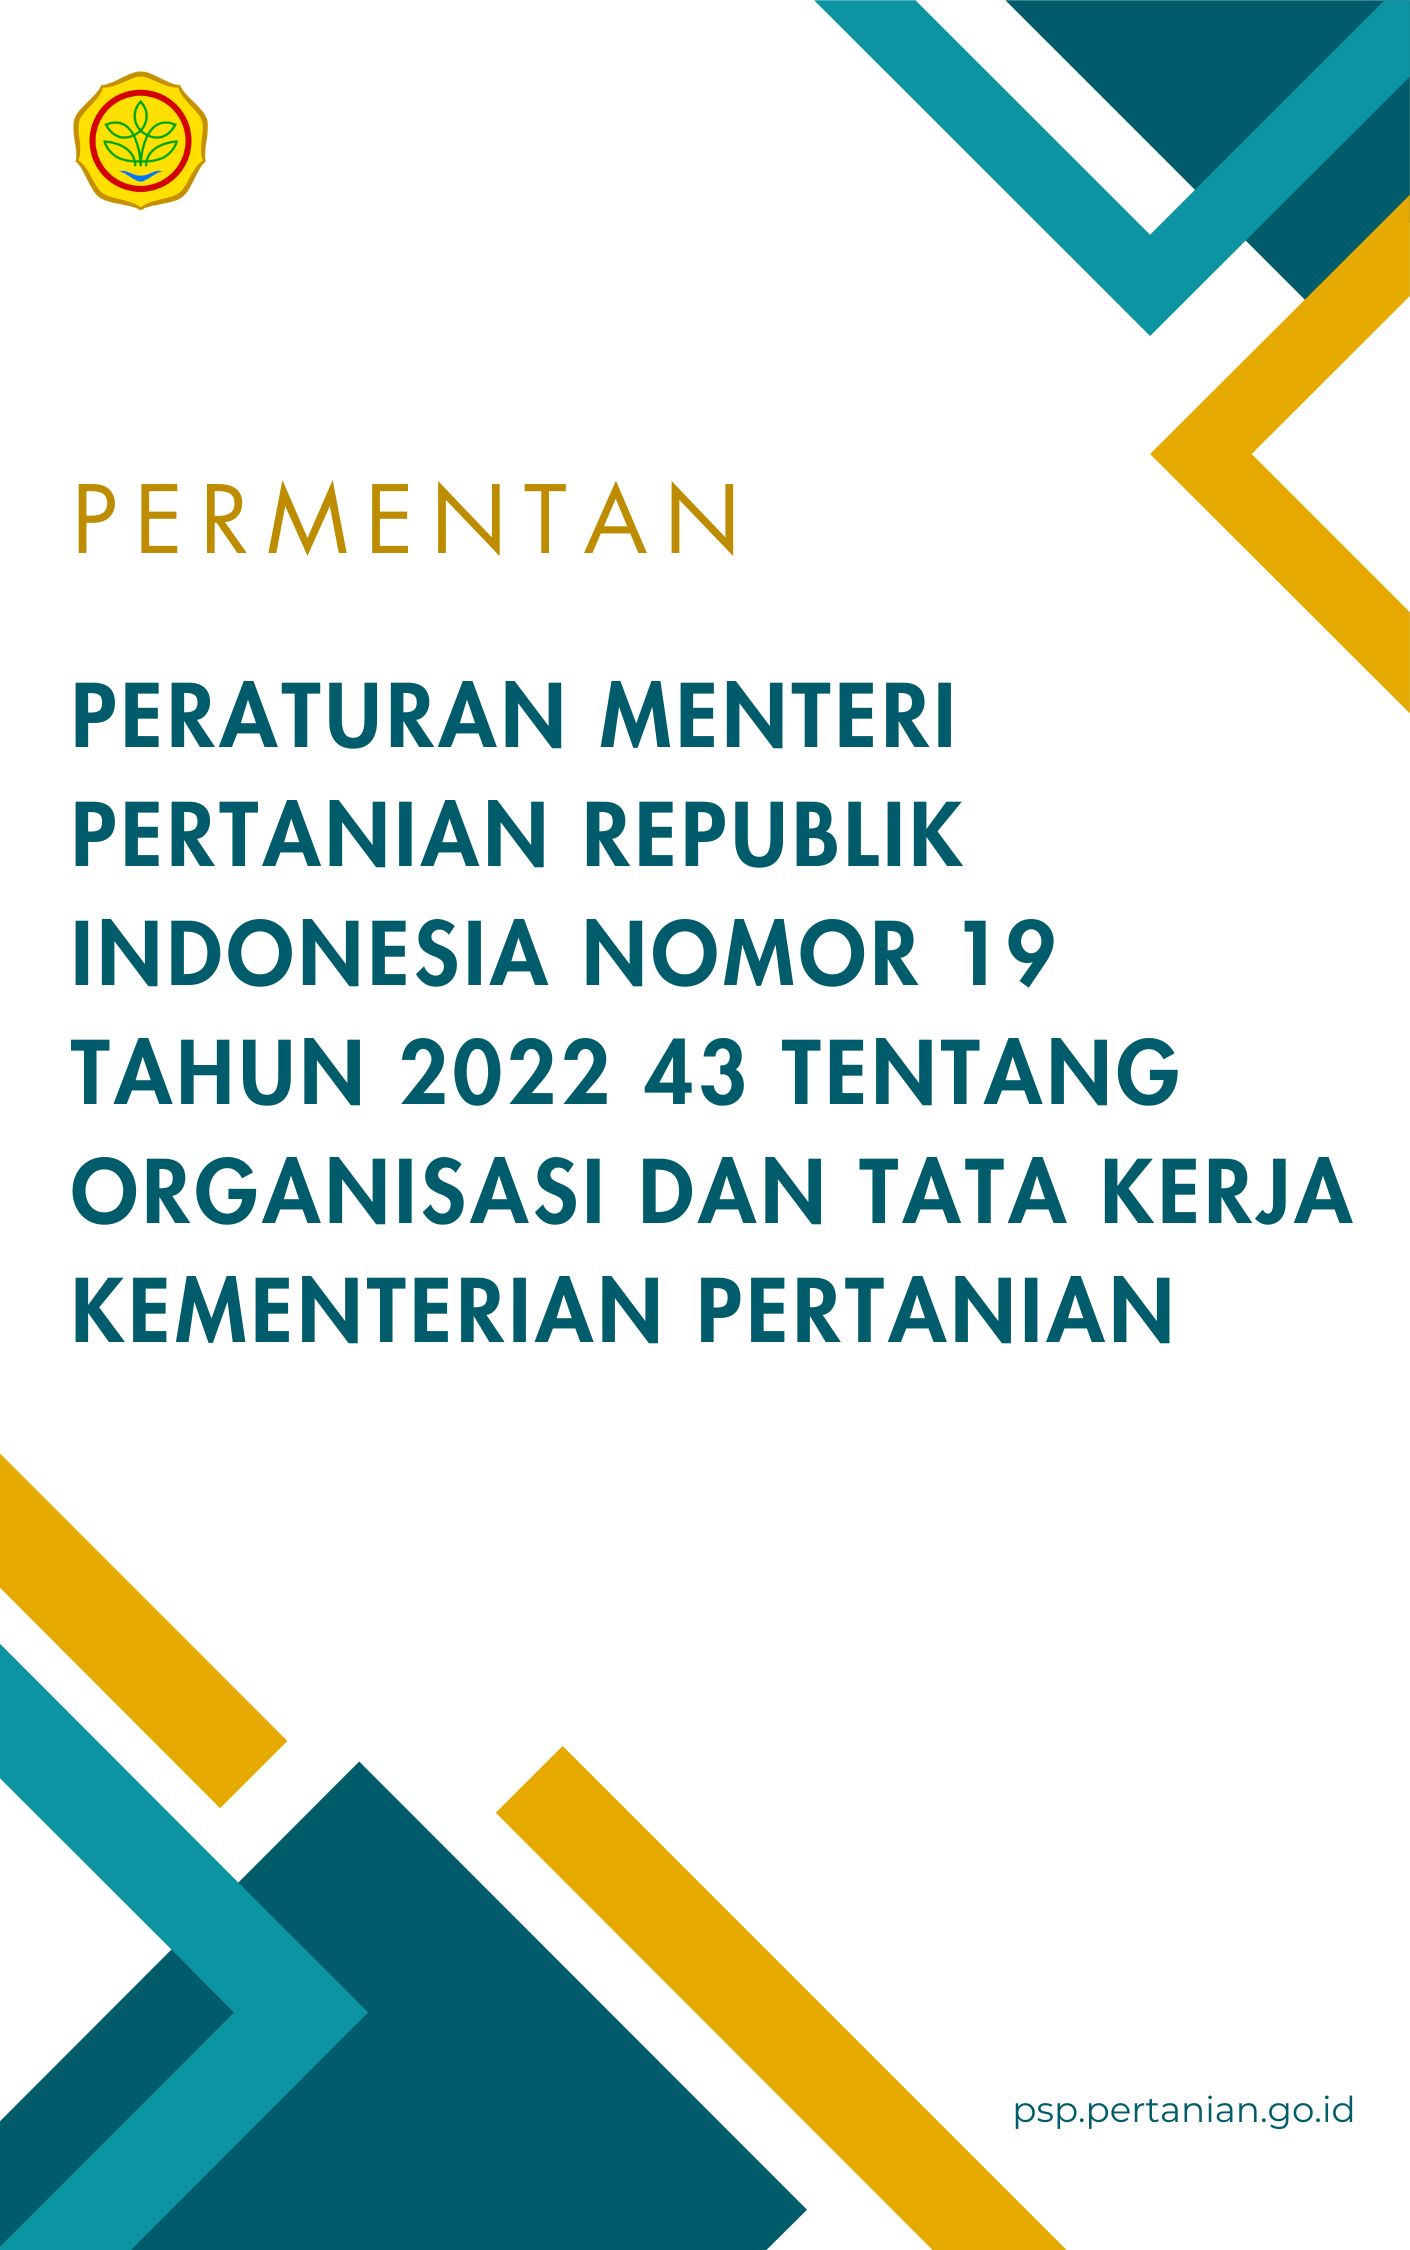 PERATURAN MENTERI PERTANIAN REPUBLIK INDONESIA  NOMOR 19 TAHUN 2022 43 TENTANG ORGANISASI DAN TATA KERJA KEMENTERIAN PERTANIAN